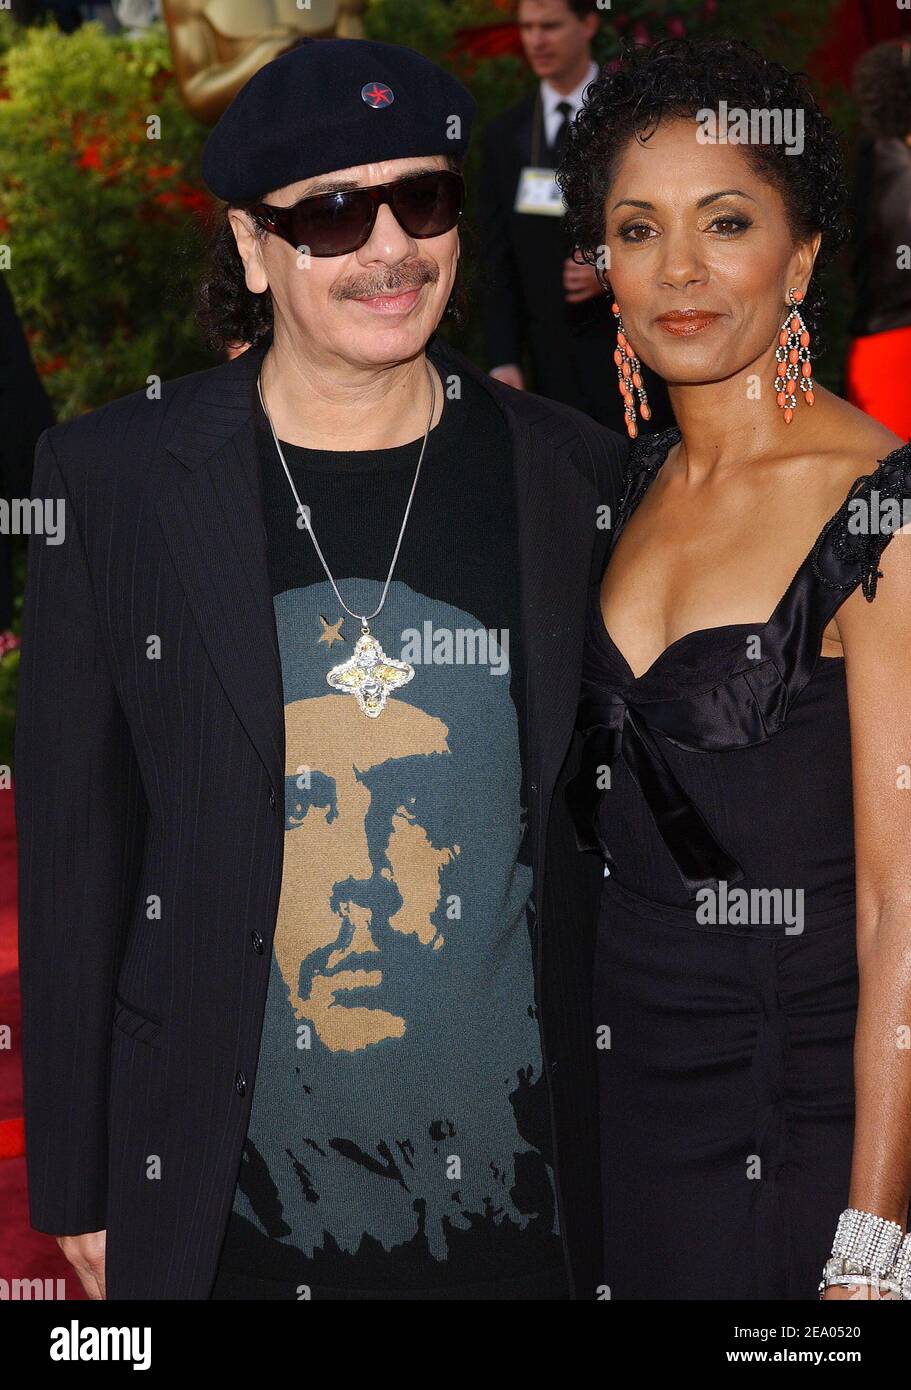 Carlos Santana and wife Debra arrive at the 77th Annual Academy Awards held at the Kodak Theater in Hollywood, CA on February 27, 2005. Photo by Hahn-Khayat-Nebinger/ABACA Stock Photo